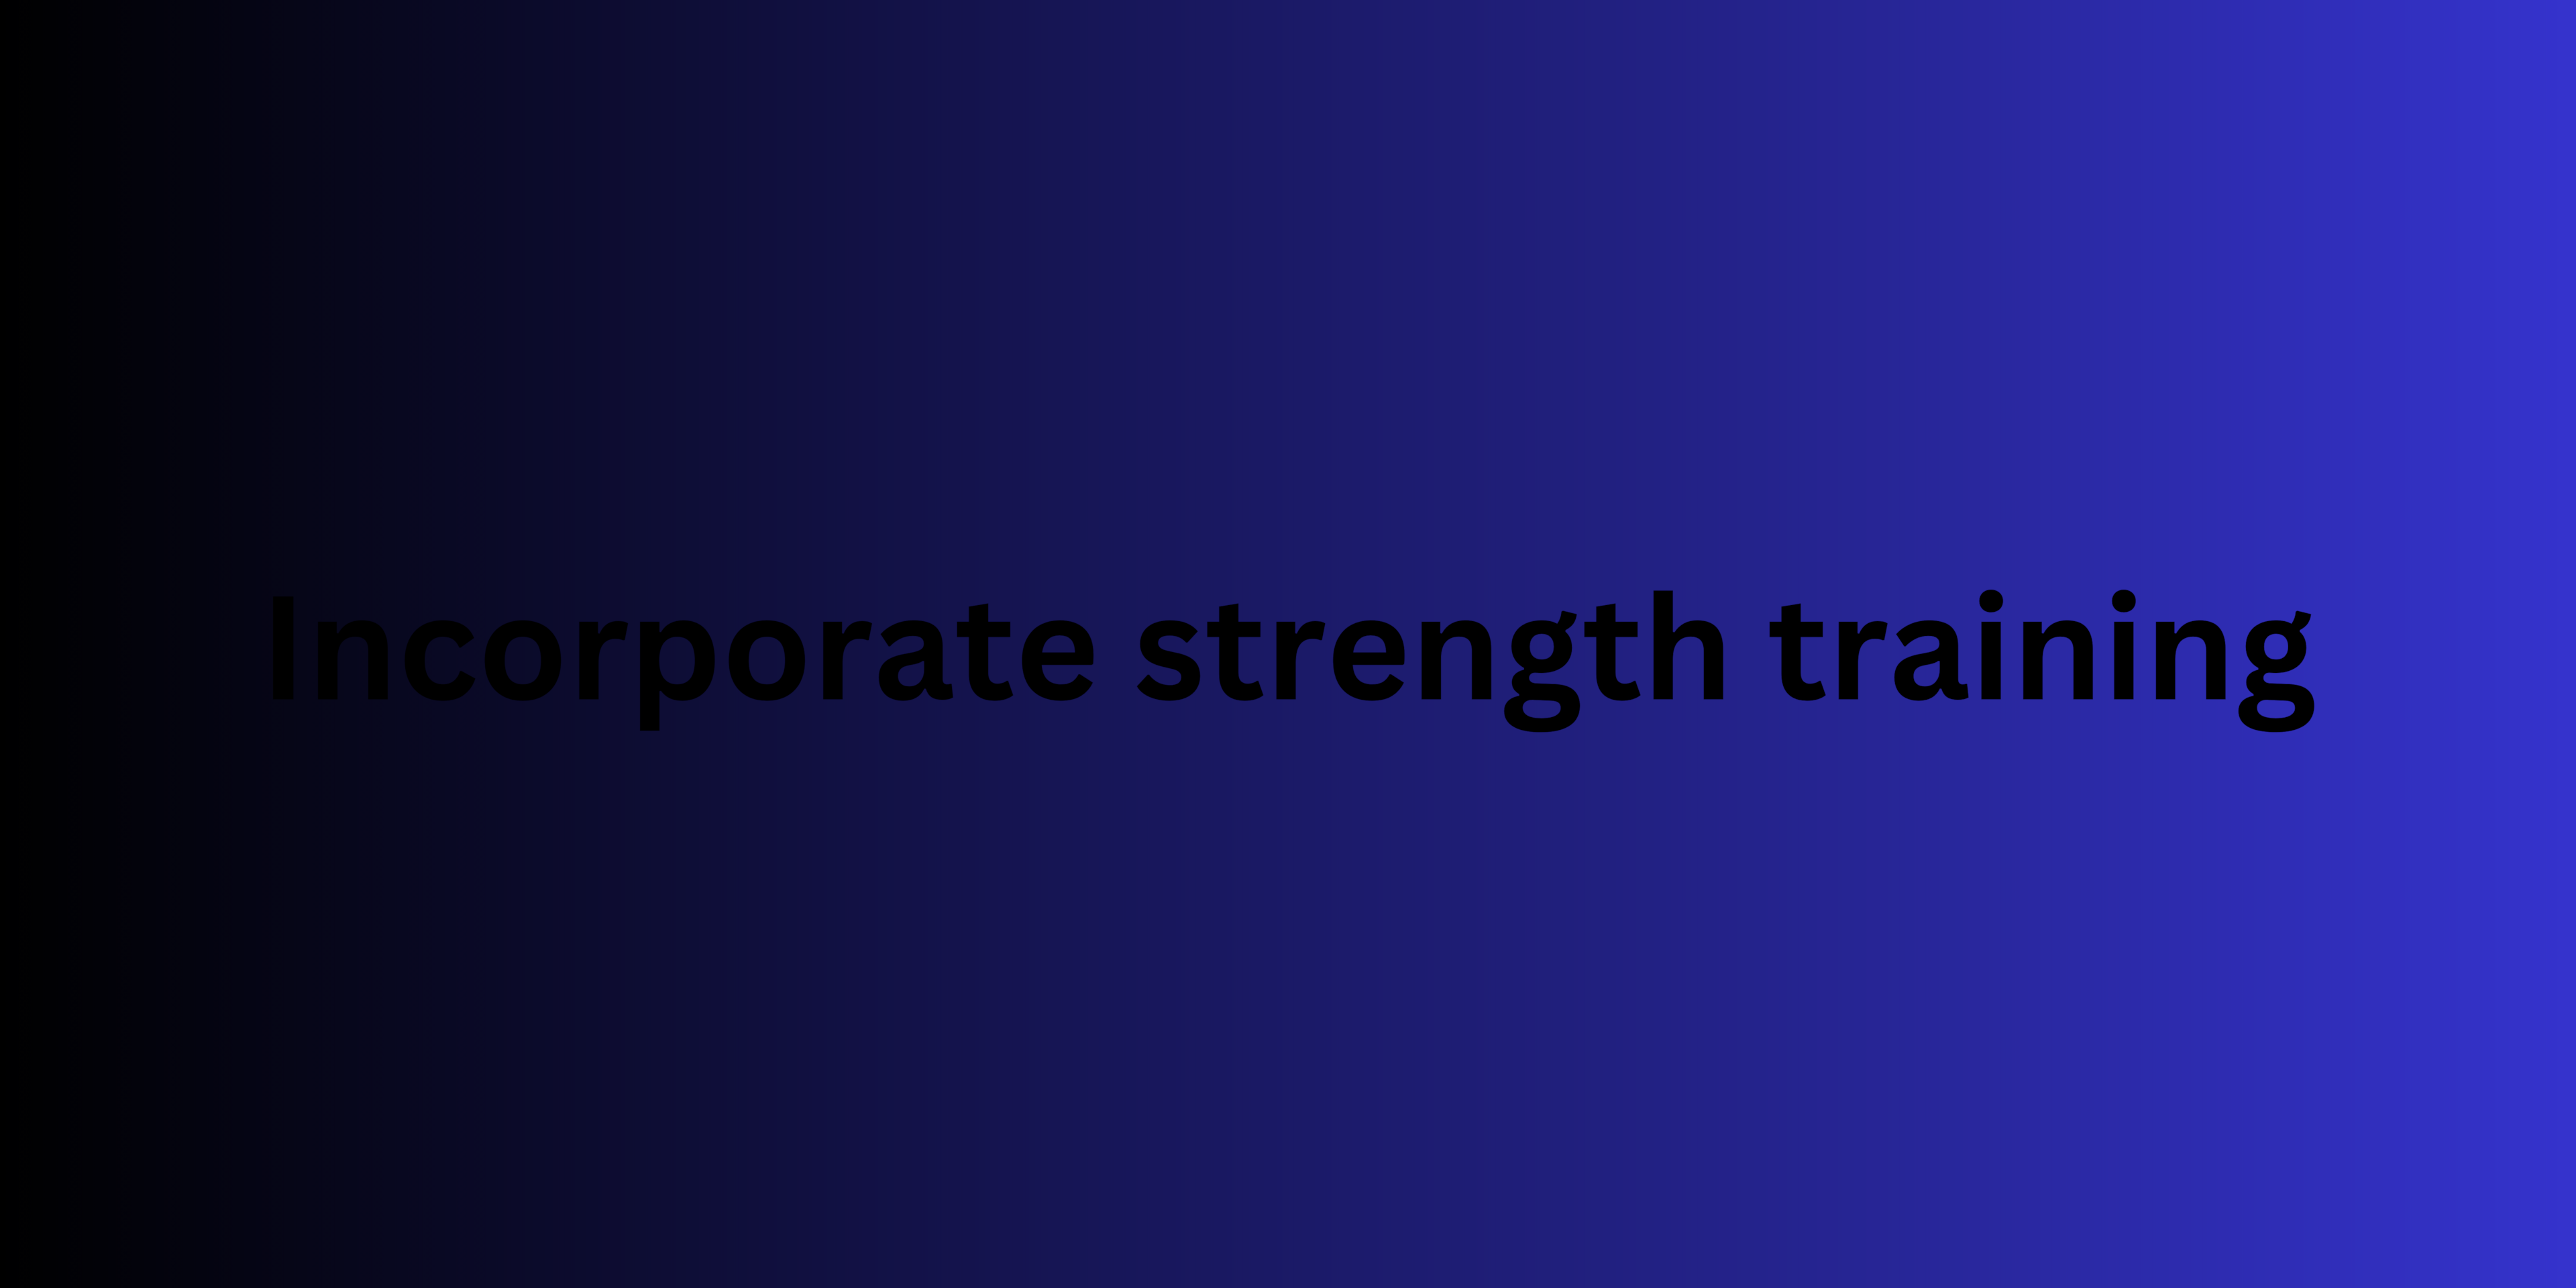 Incorporate strength training